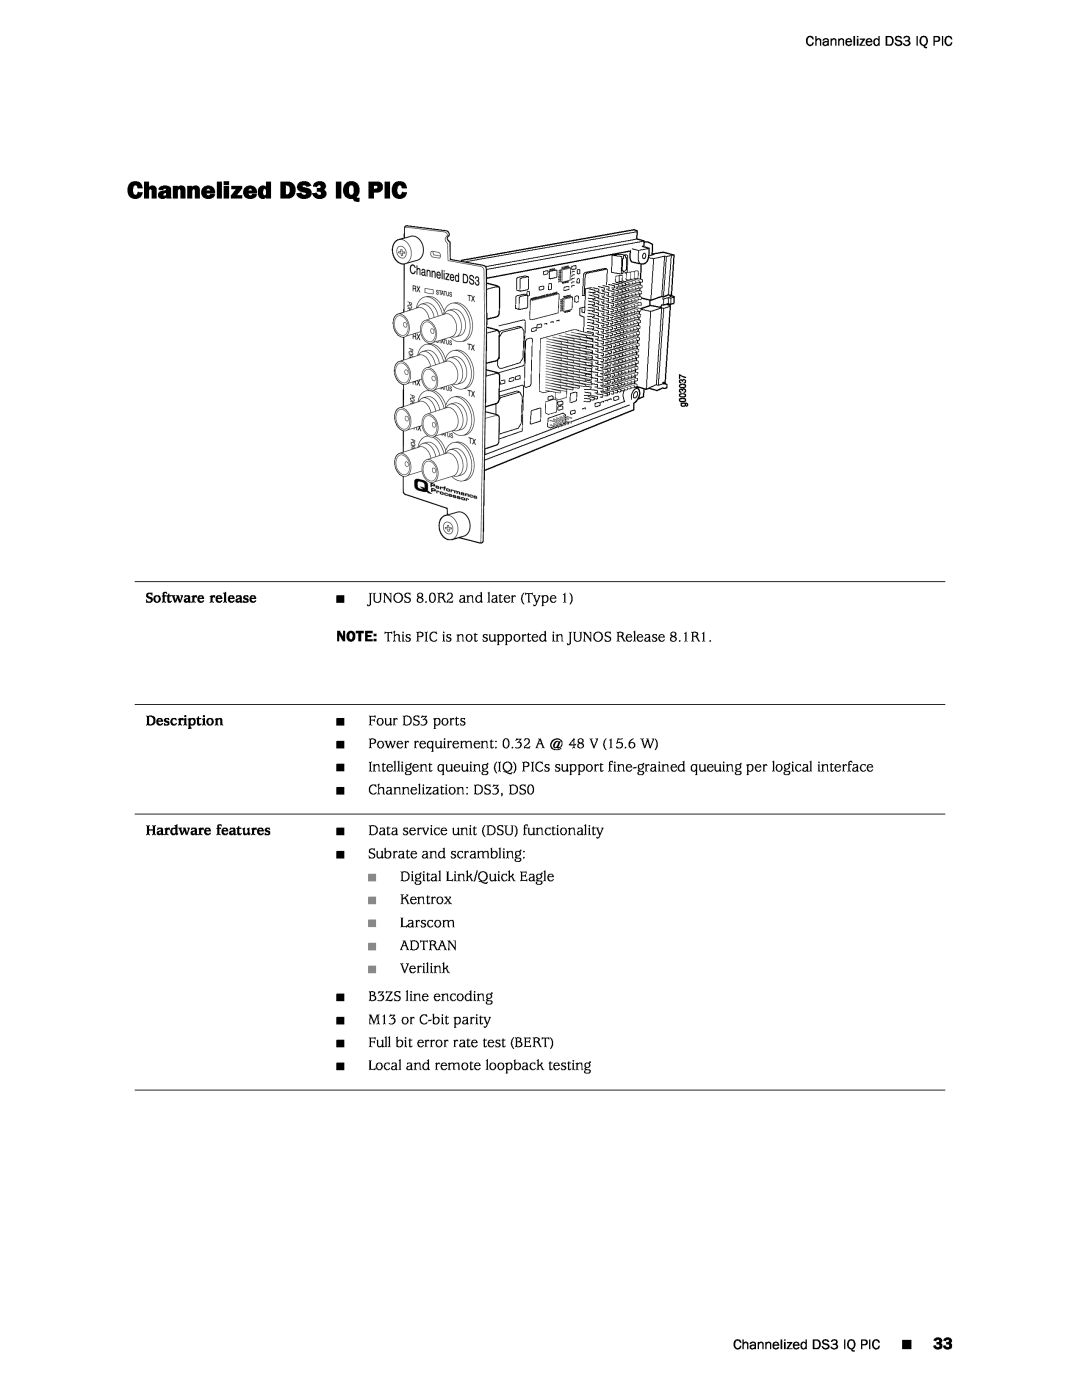 Juniper Networks M120 manual Channelized DS3 IQ PIC, Software release, Description, Hardware features 